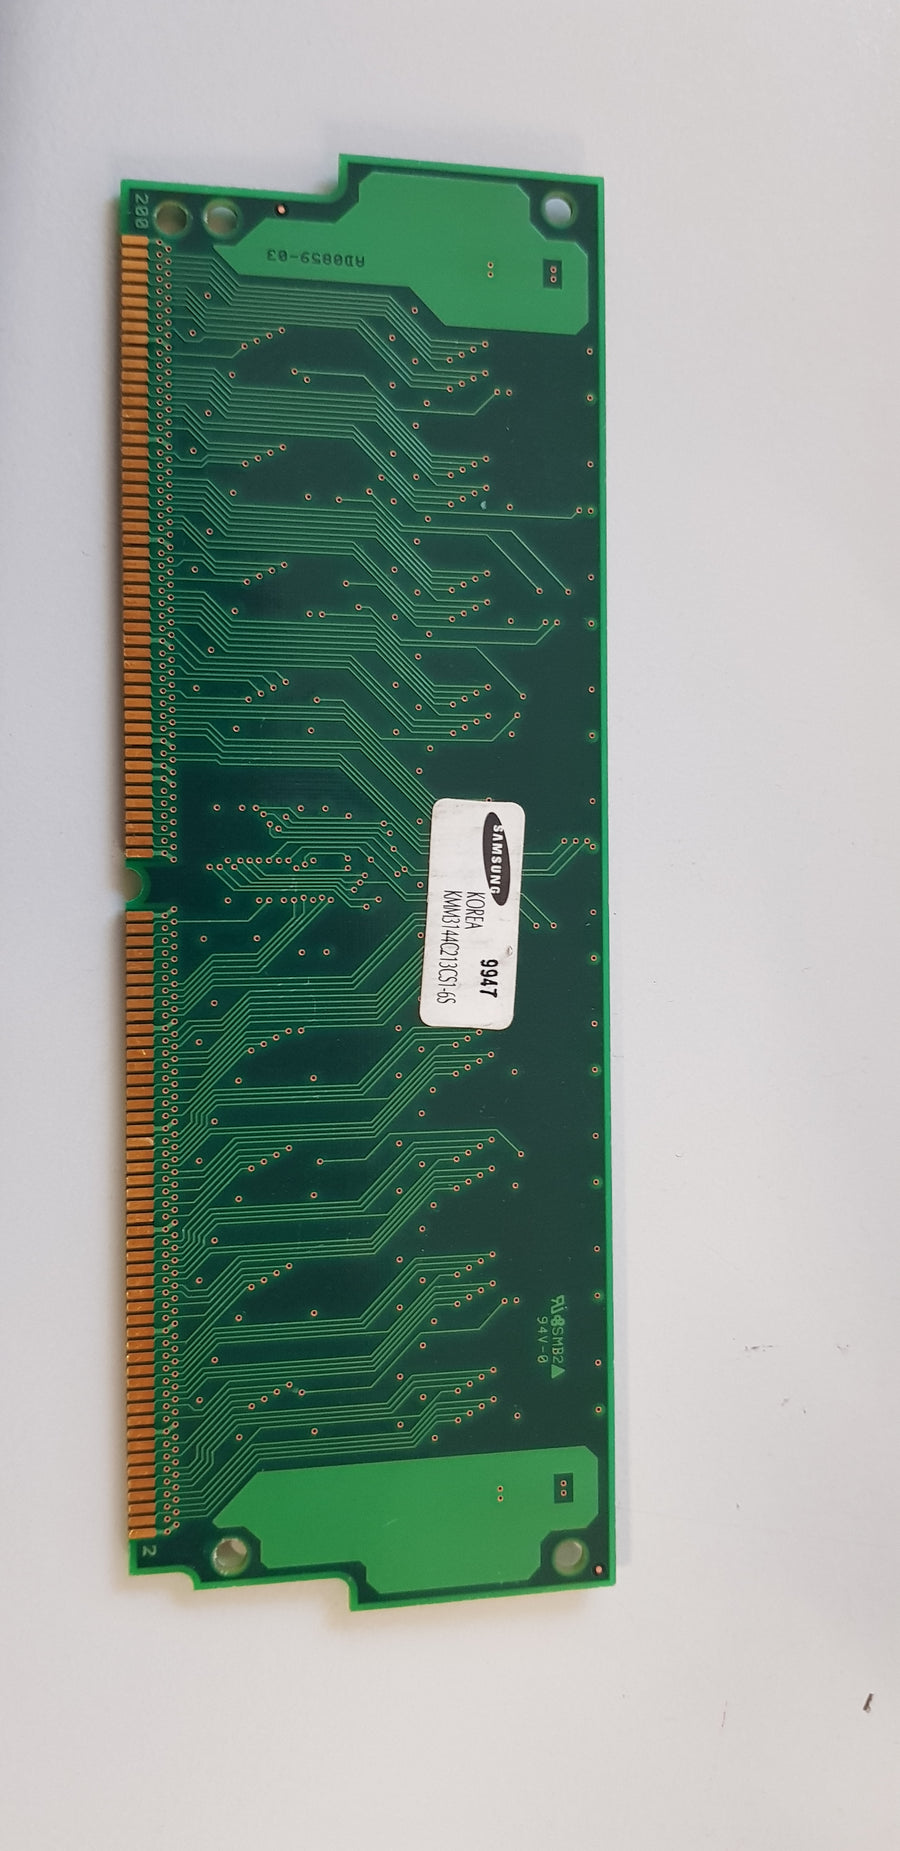 Samsung 64MB Kit (2 X 32MB) 72Pins SIMM Memory Module (KMM3144C213CS16S)